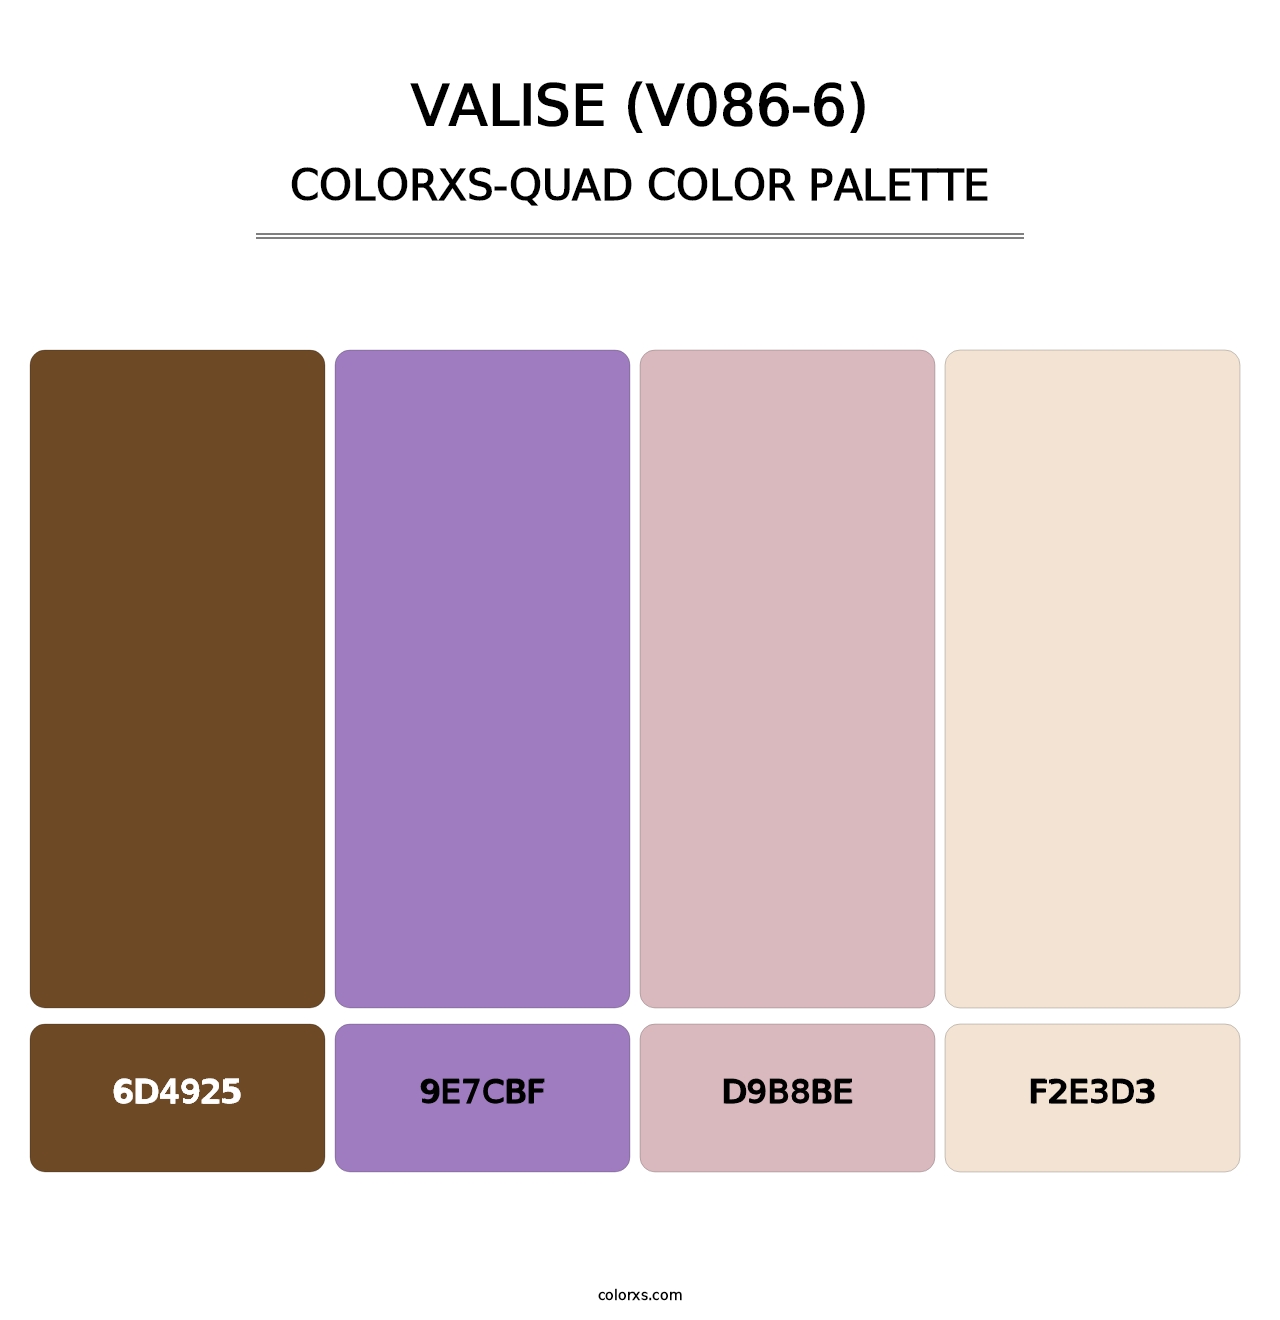 Valise (V086-6) - Colorxs Quad Palette